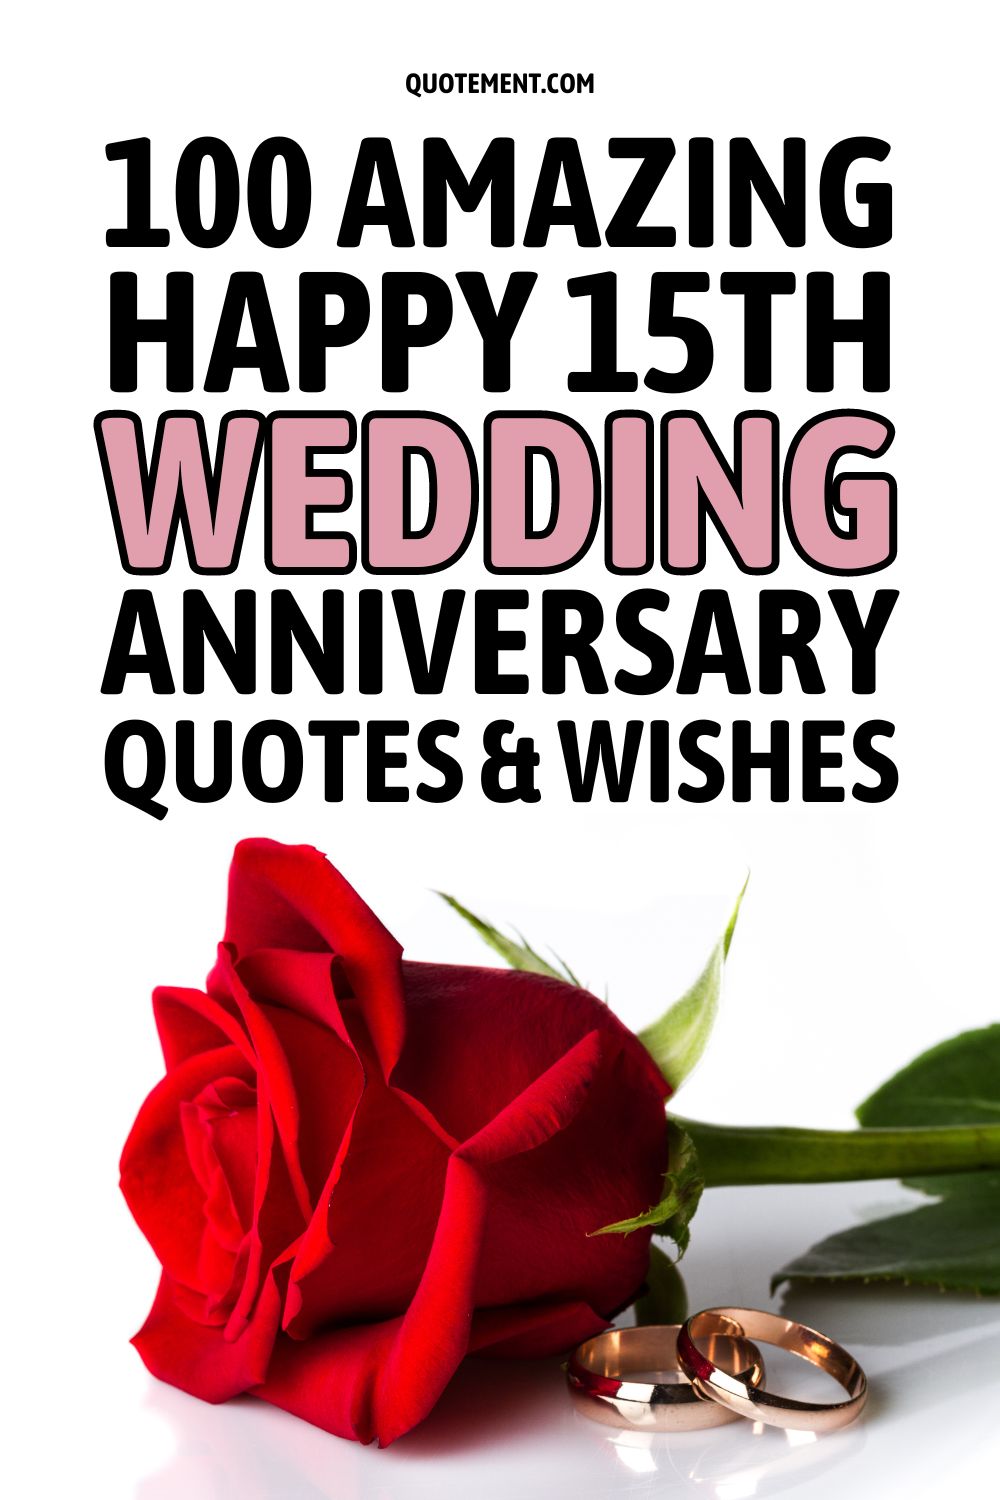 100 Amazing Happy 15th Wedding Anniversary Quotes & Wishes